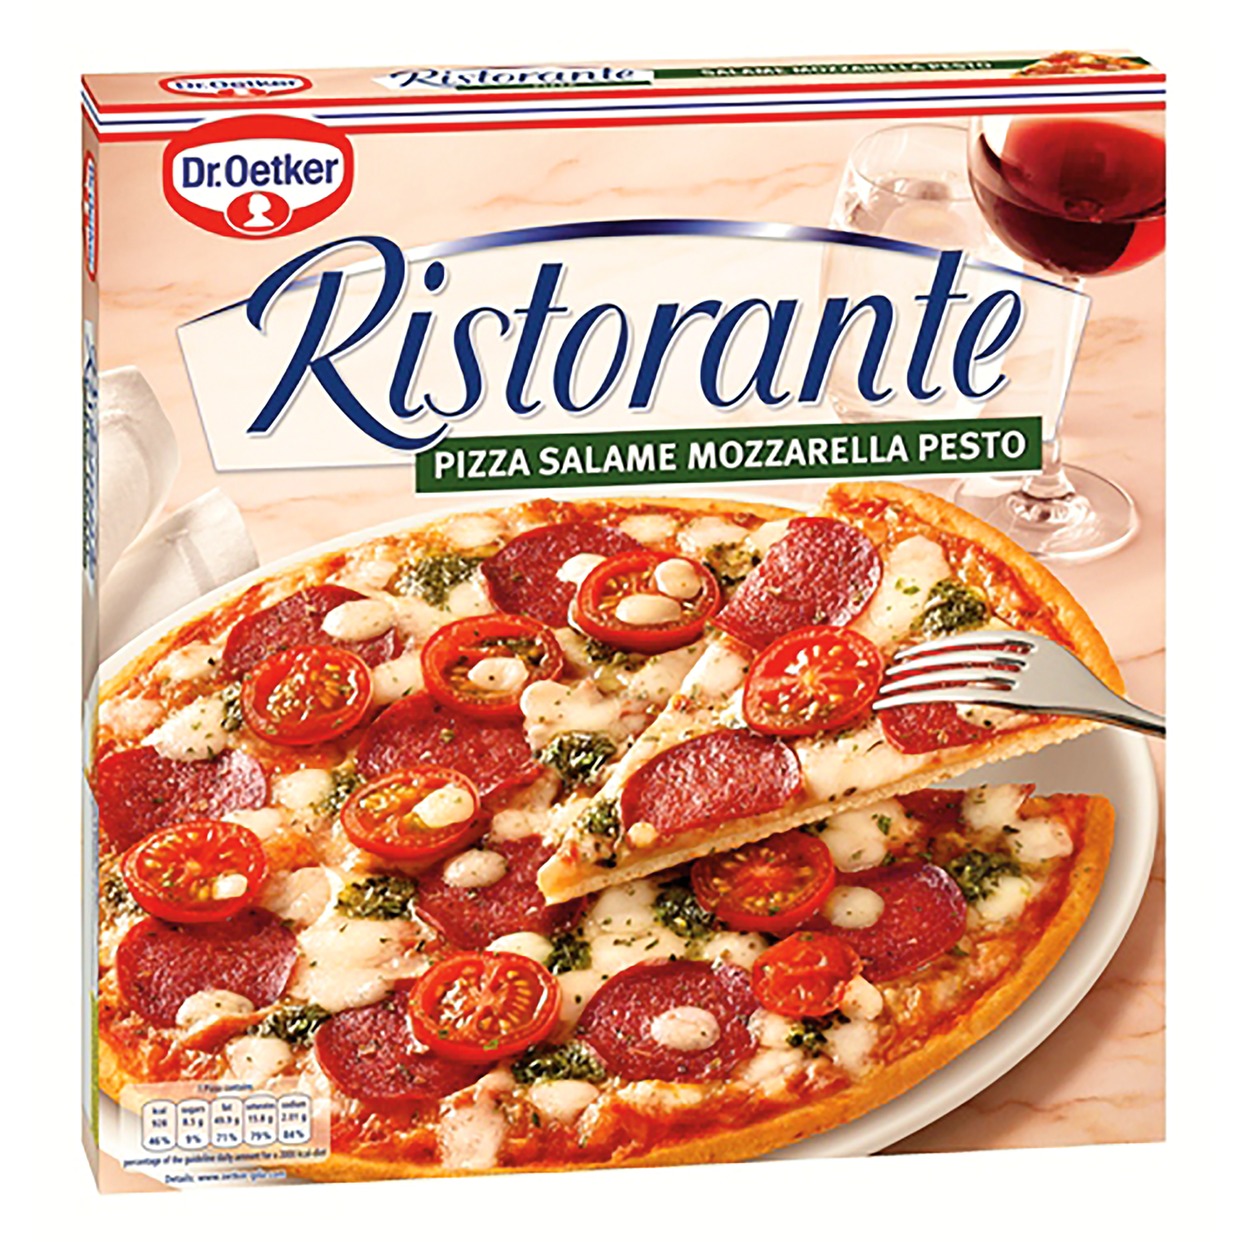 Пицца Dr.Oetker Ristorante Салями Моцарелла Песто 360 г по акции в Пятерочке